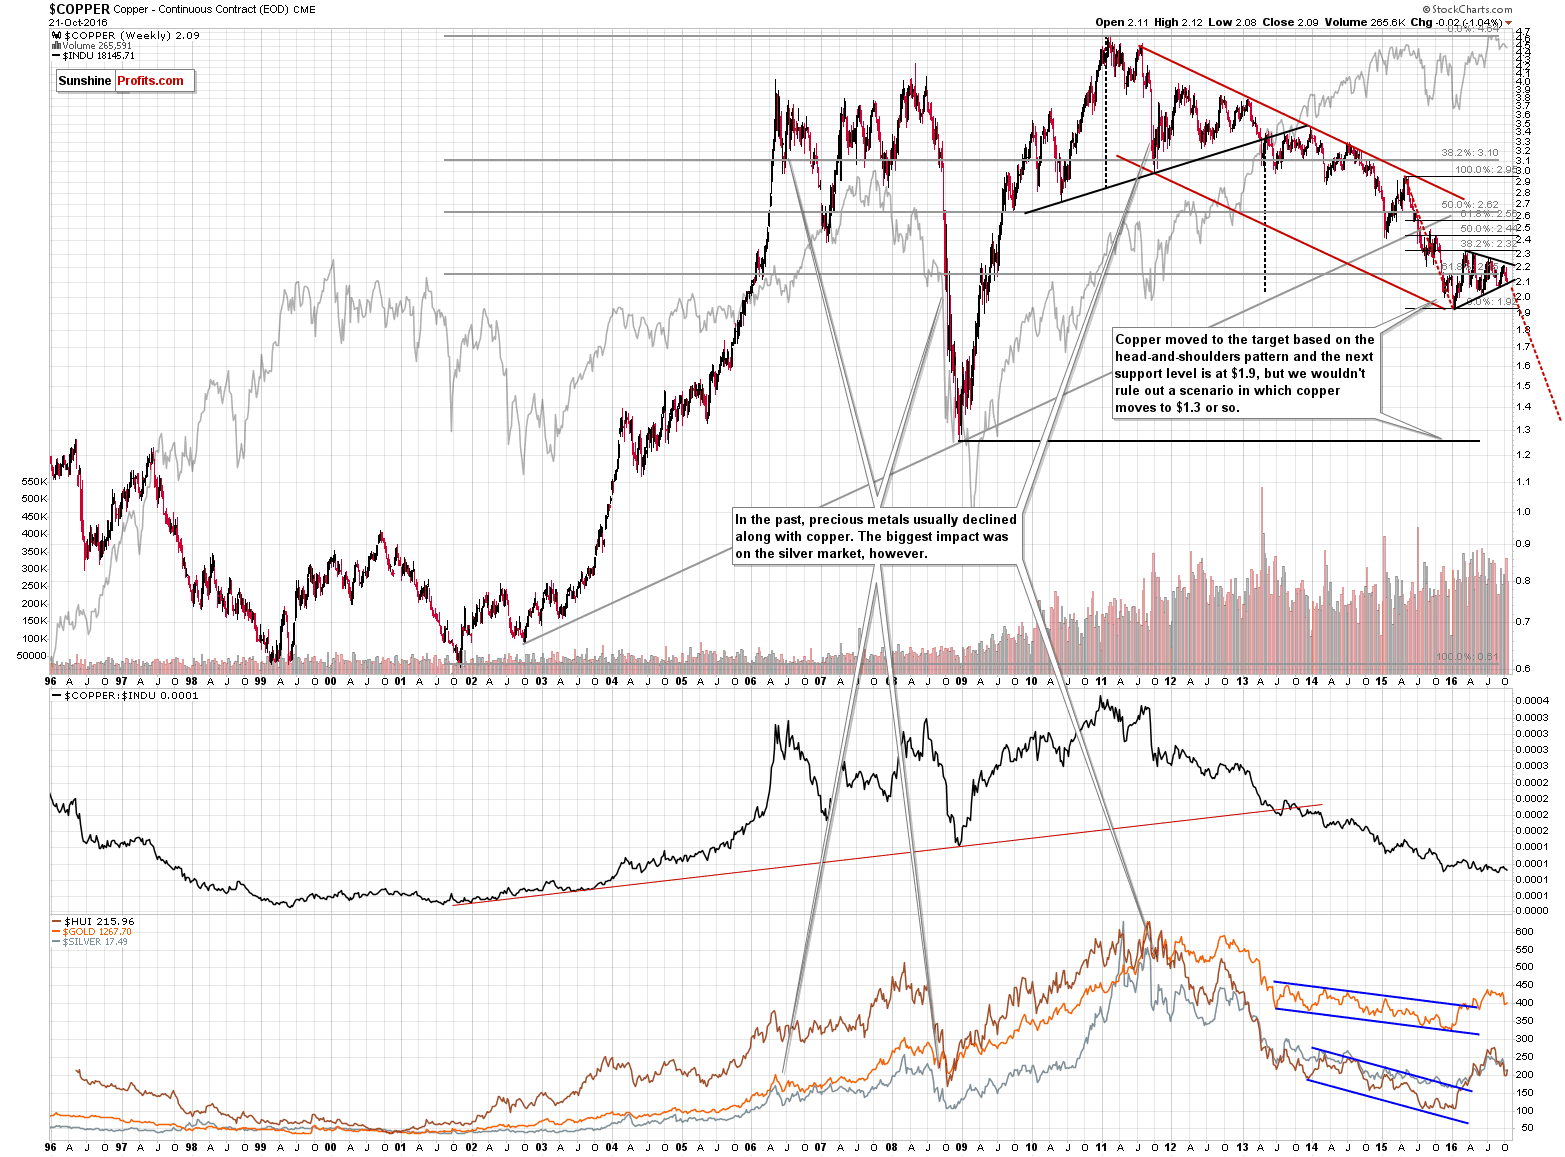 Long-term Copper price chart - Copper spot price